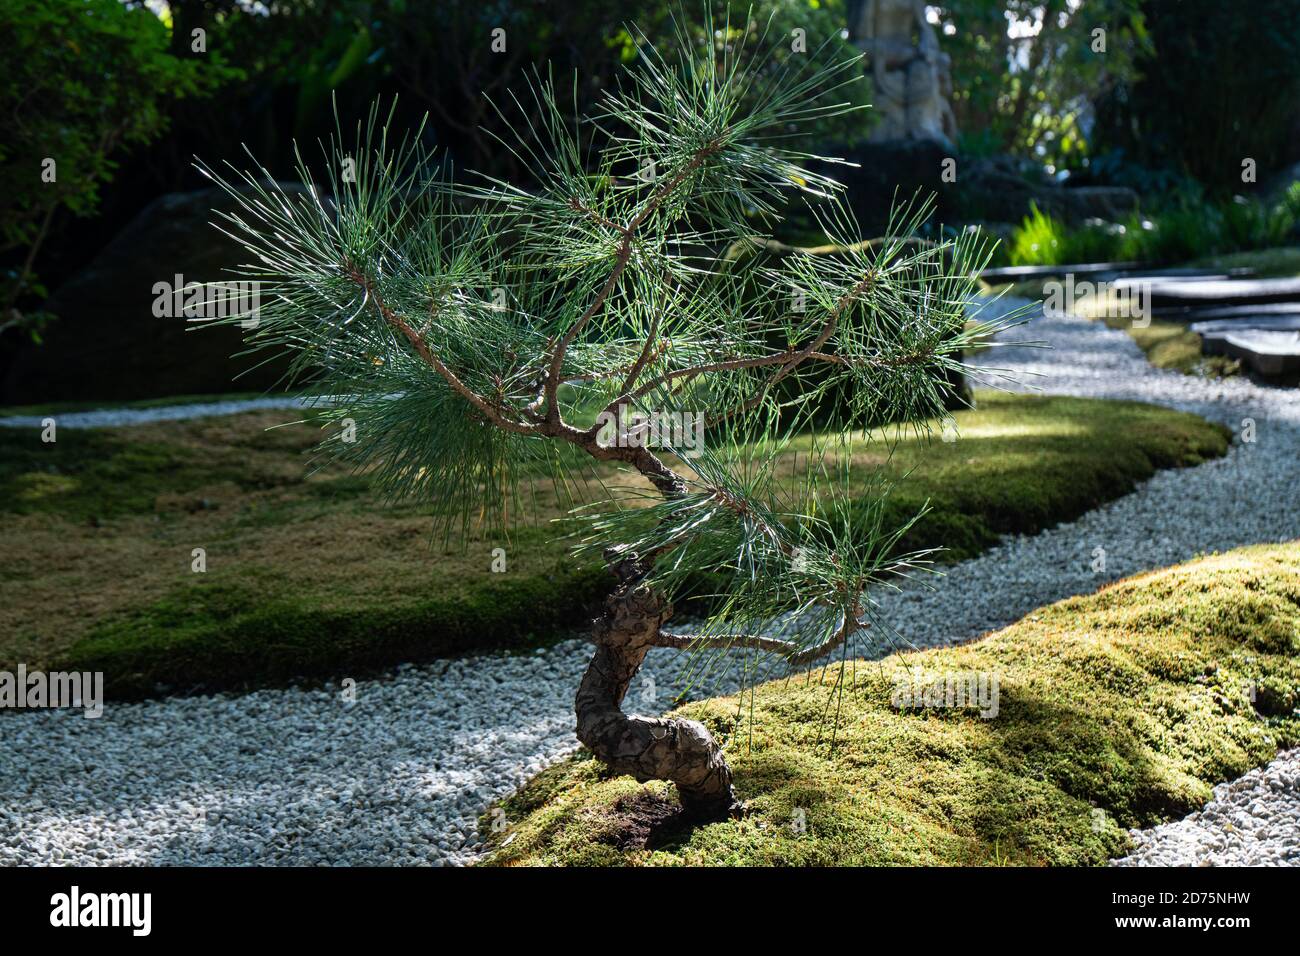 Bonsai tree at shrine in Japan. Beautiful zen garden with gravel